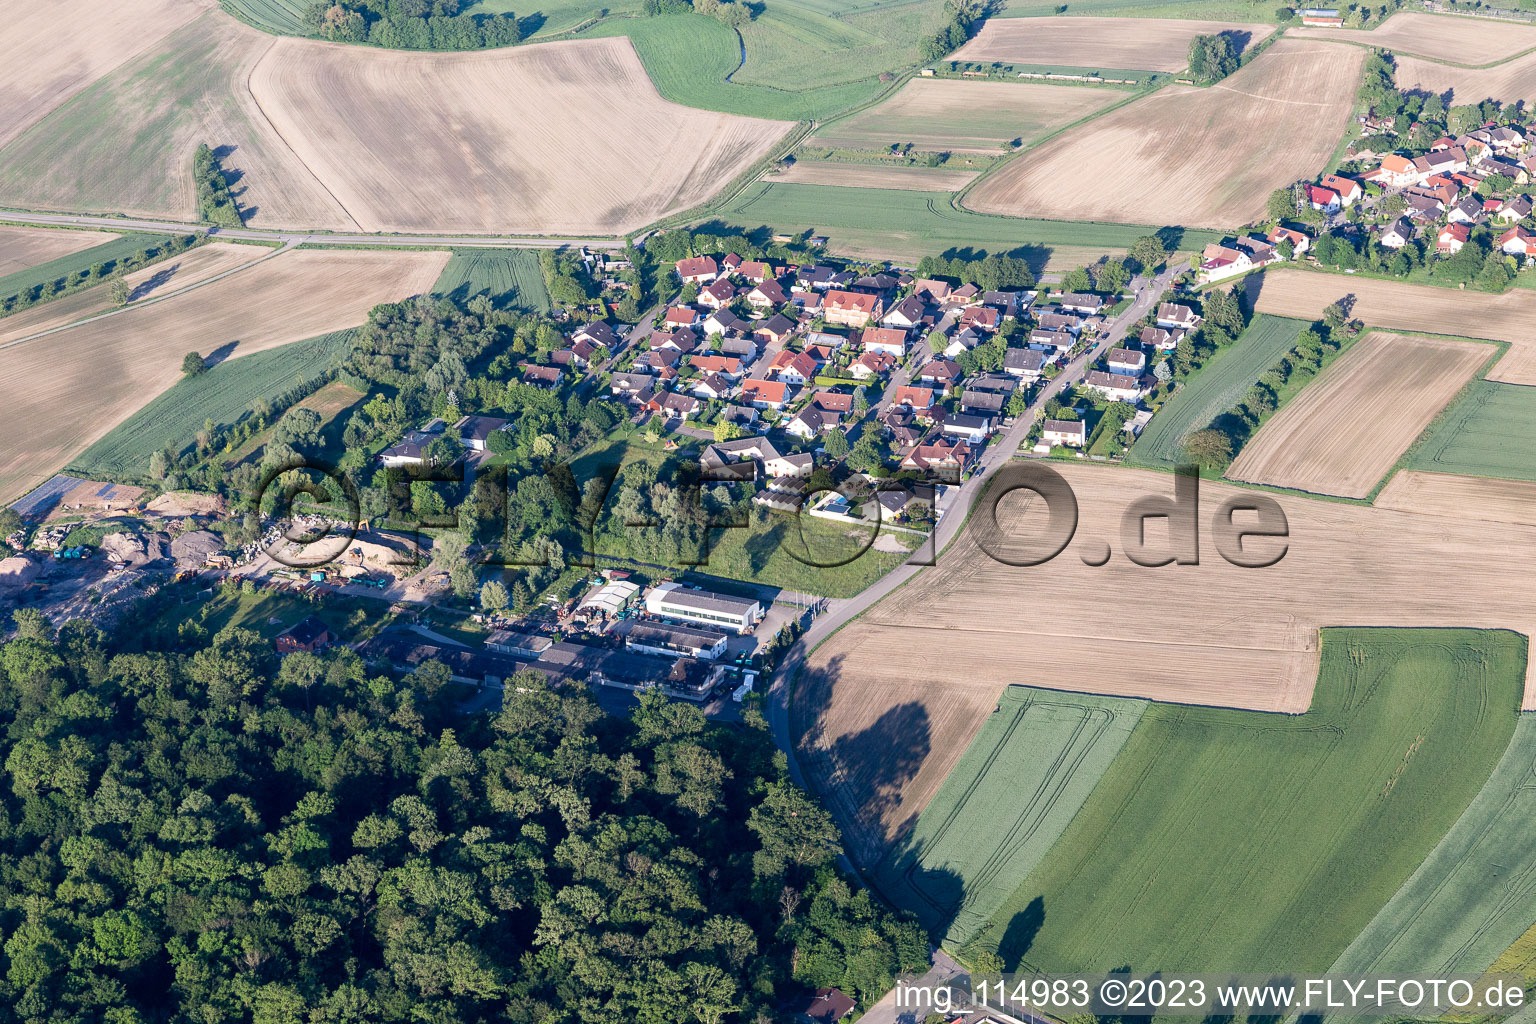 Aerial view of District Linx in Rheinau in the state Baden-Wuerttemberg, Germany